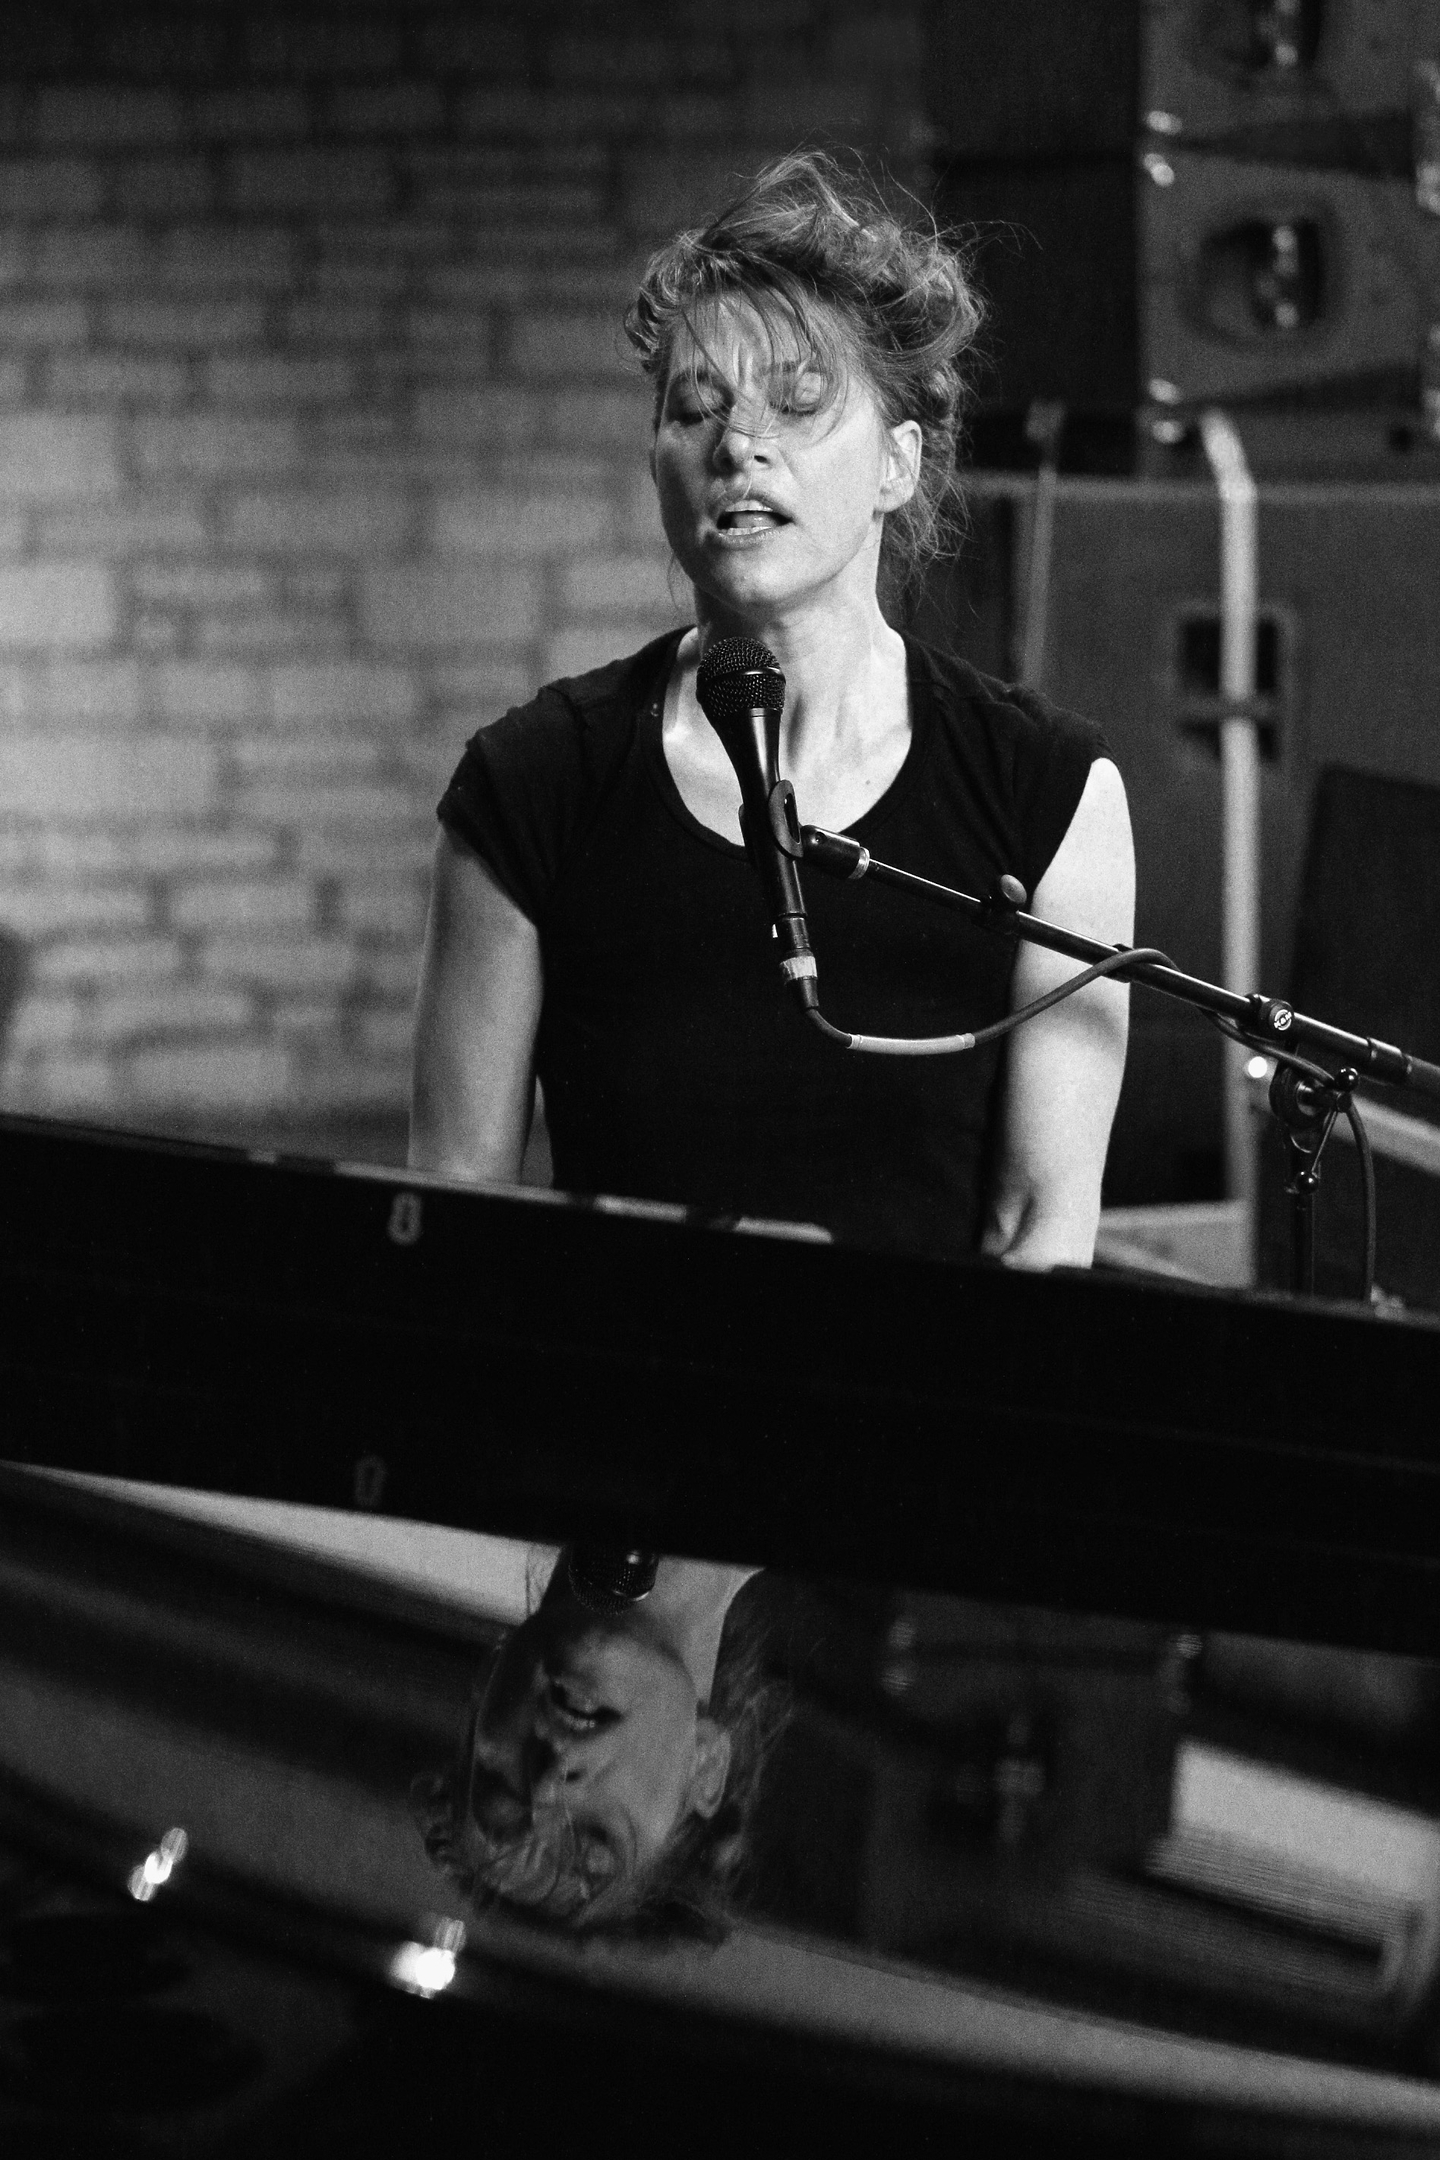 Amanda Palmer performs onstage at NPR Tiny Desk Concert at Central Presbyterian Church.